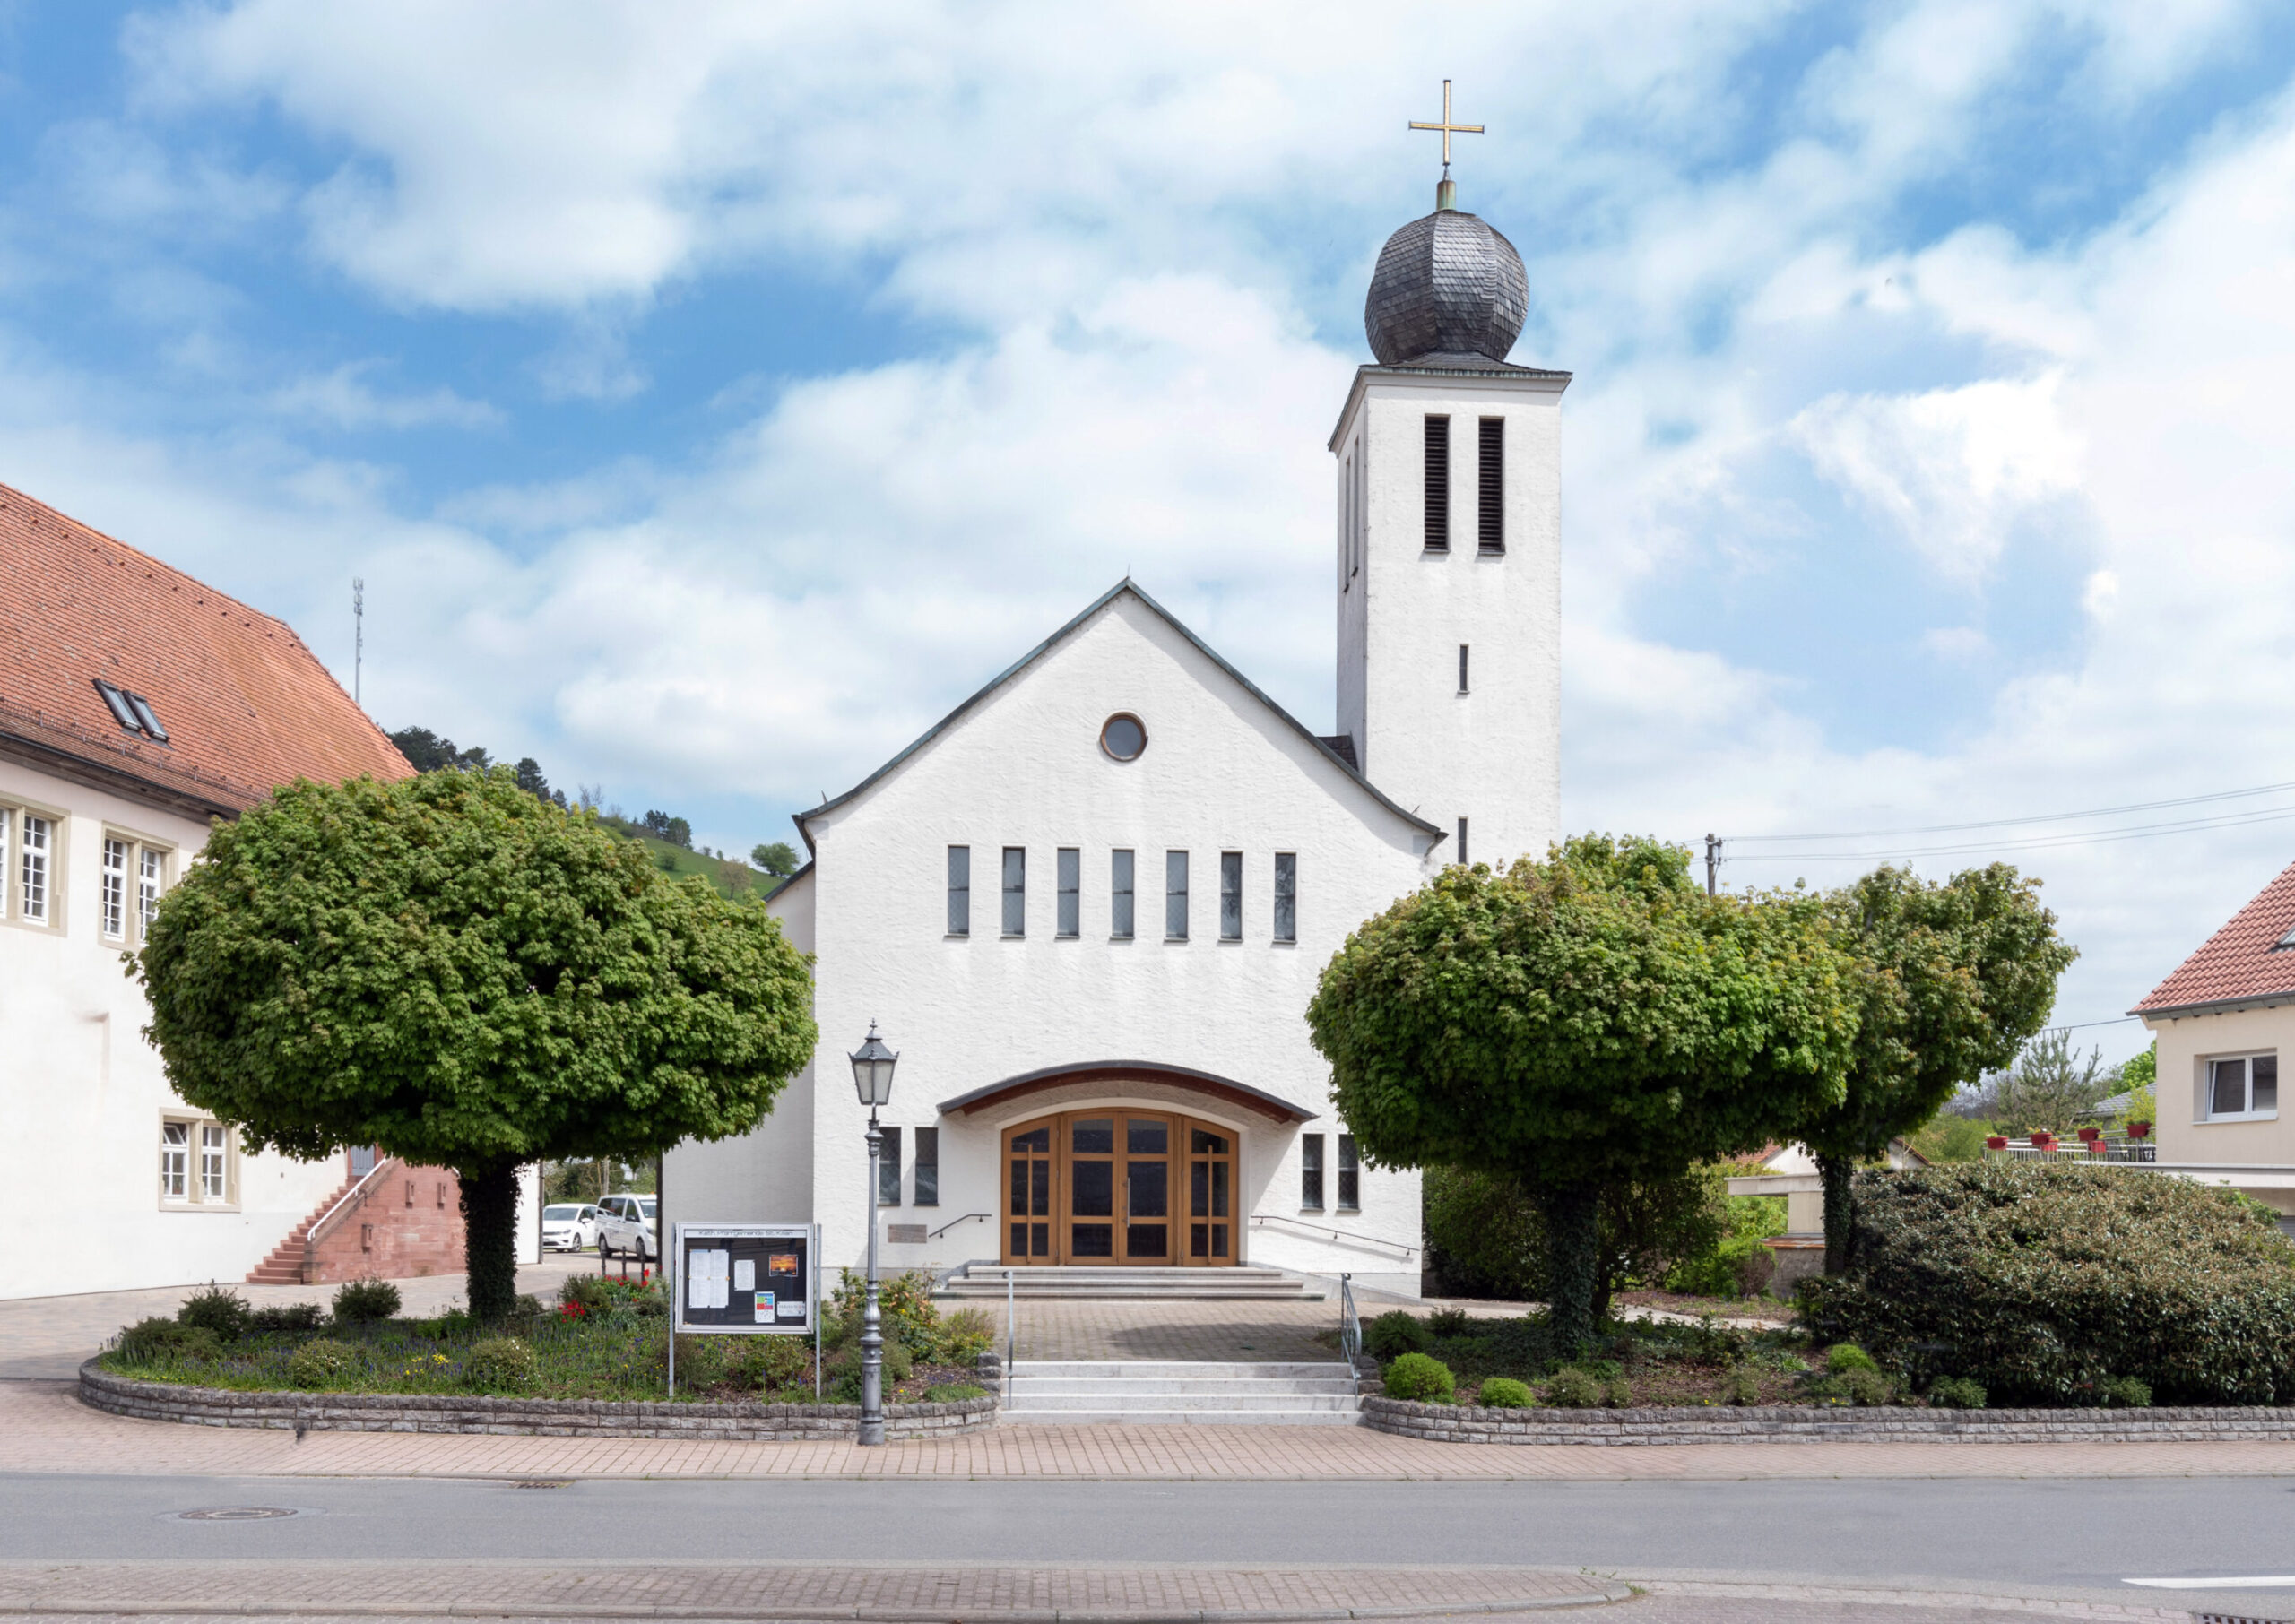 Kirche St. Kilian Boxberg-Unterschlüpf, weiß mit Zwiebelturm